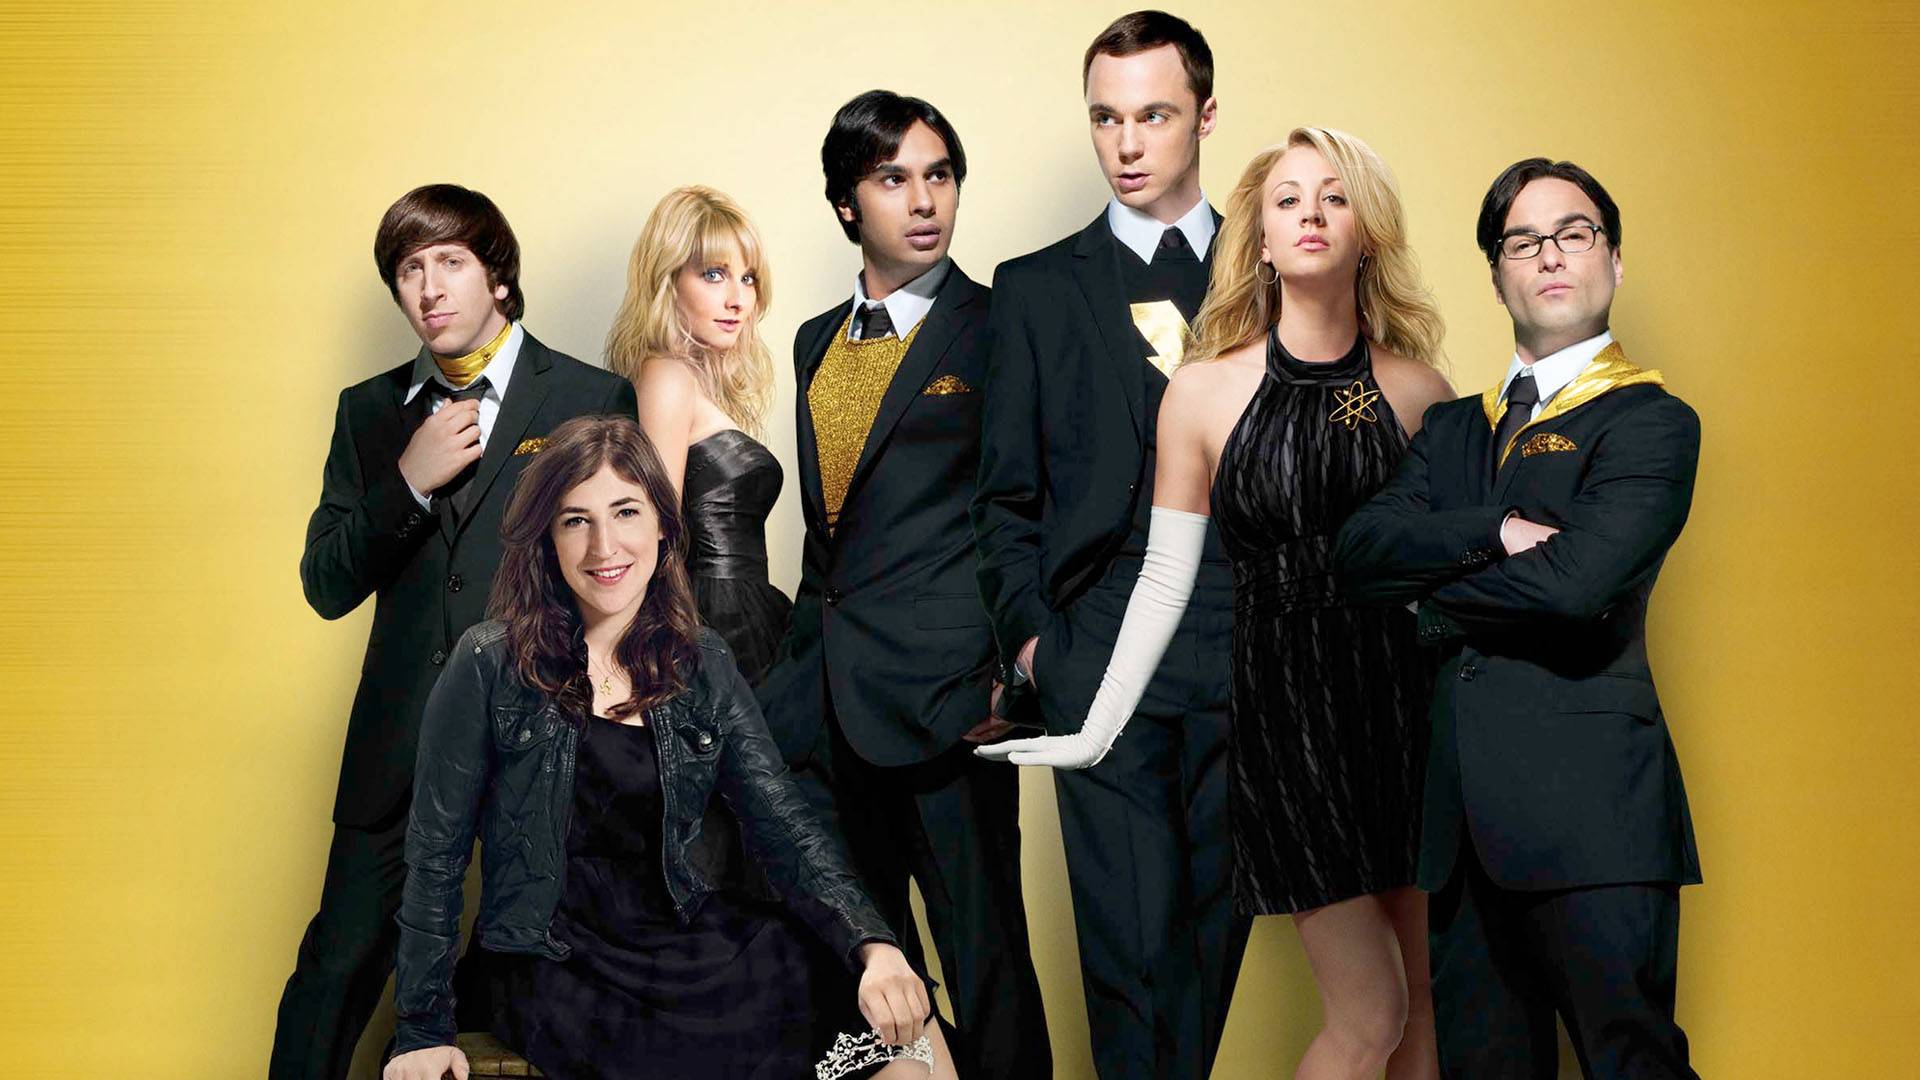 The Big Bang Theory Wallpaper High Definition